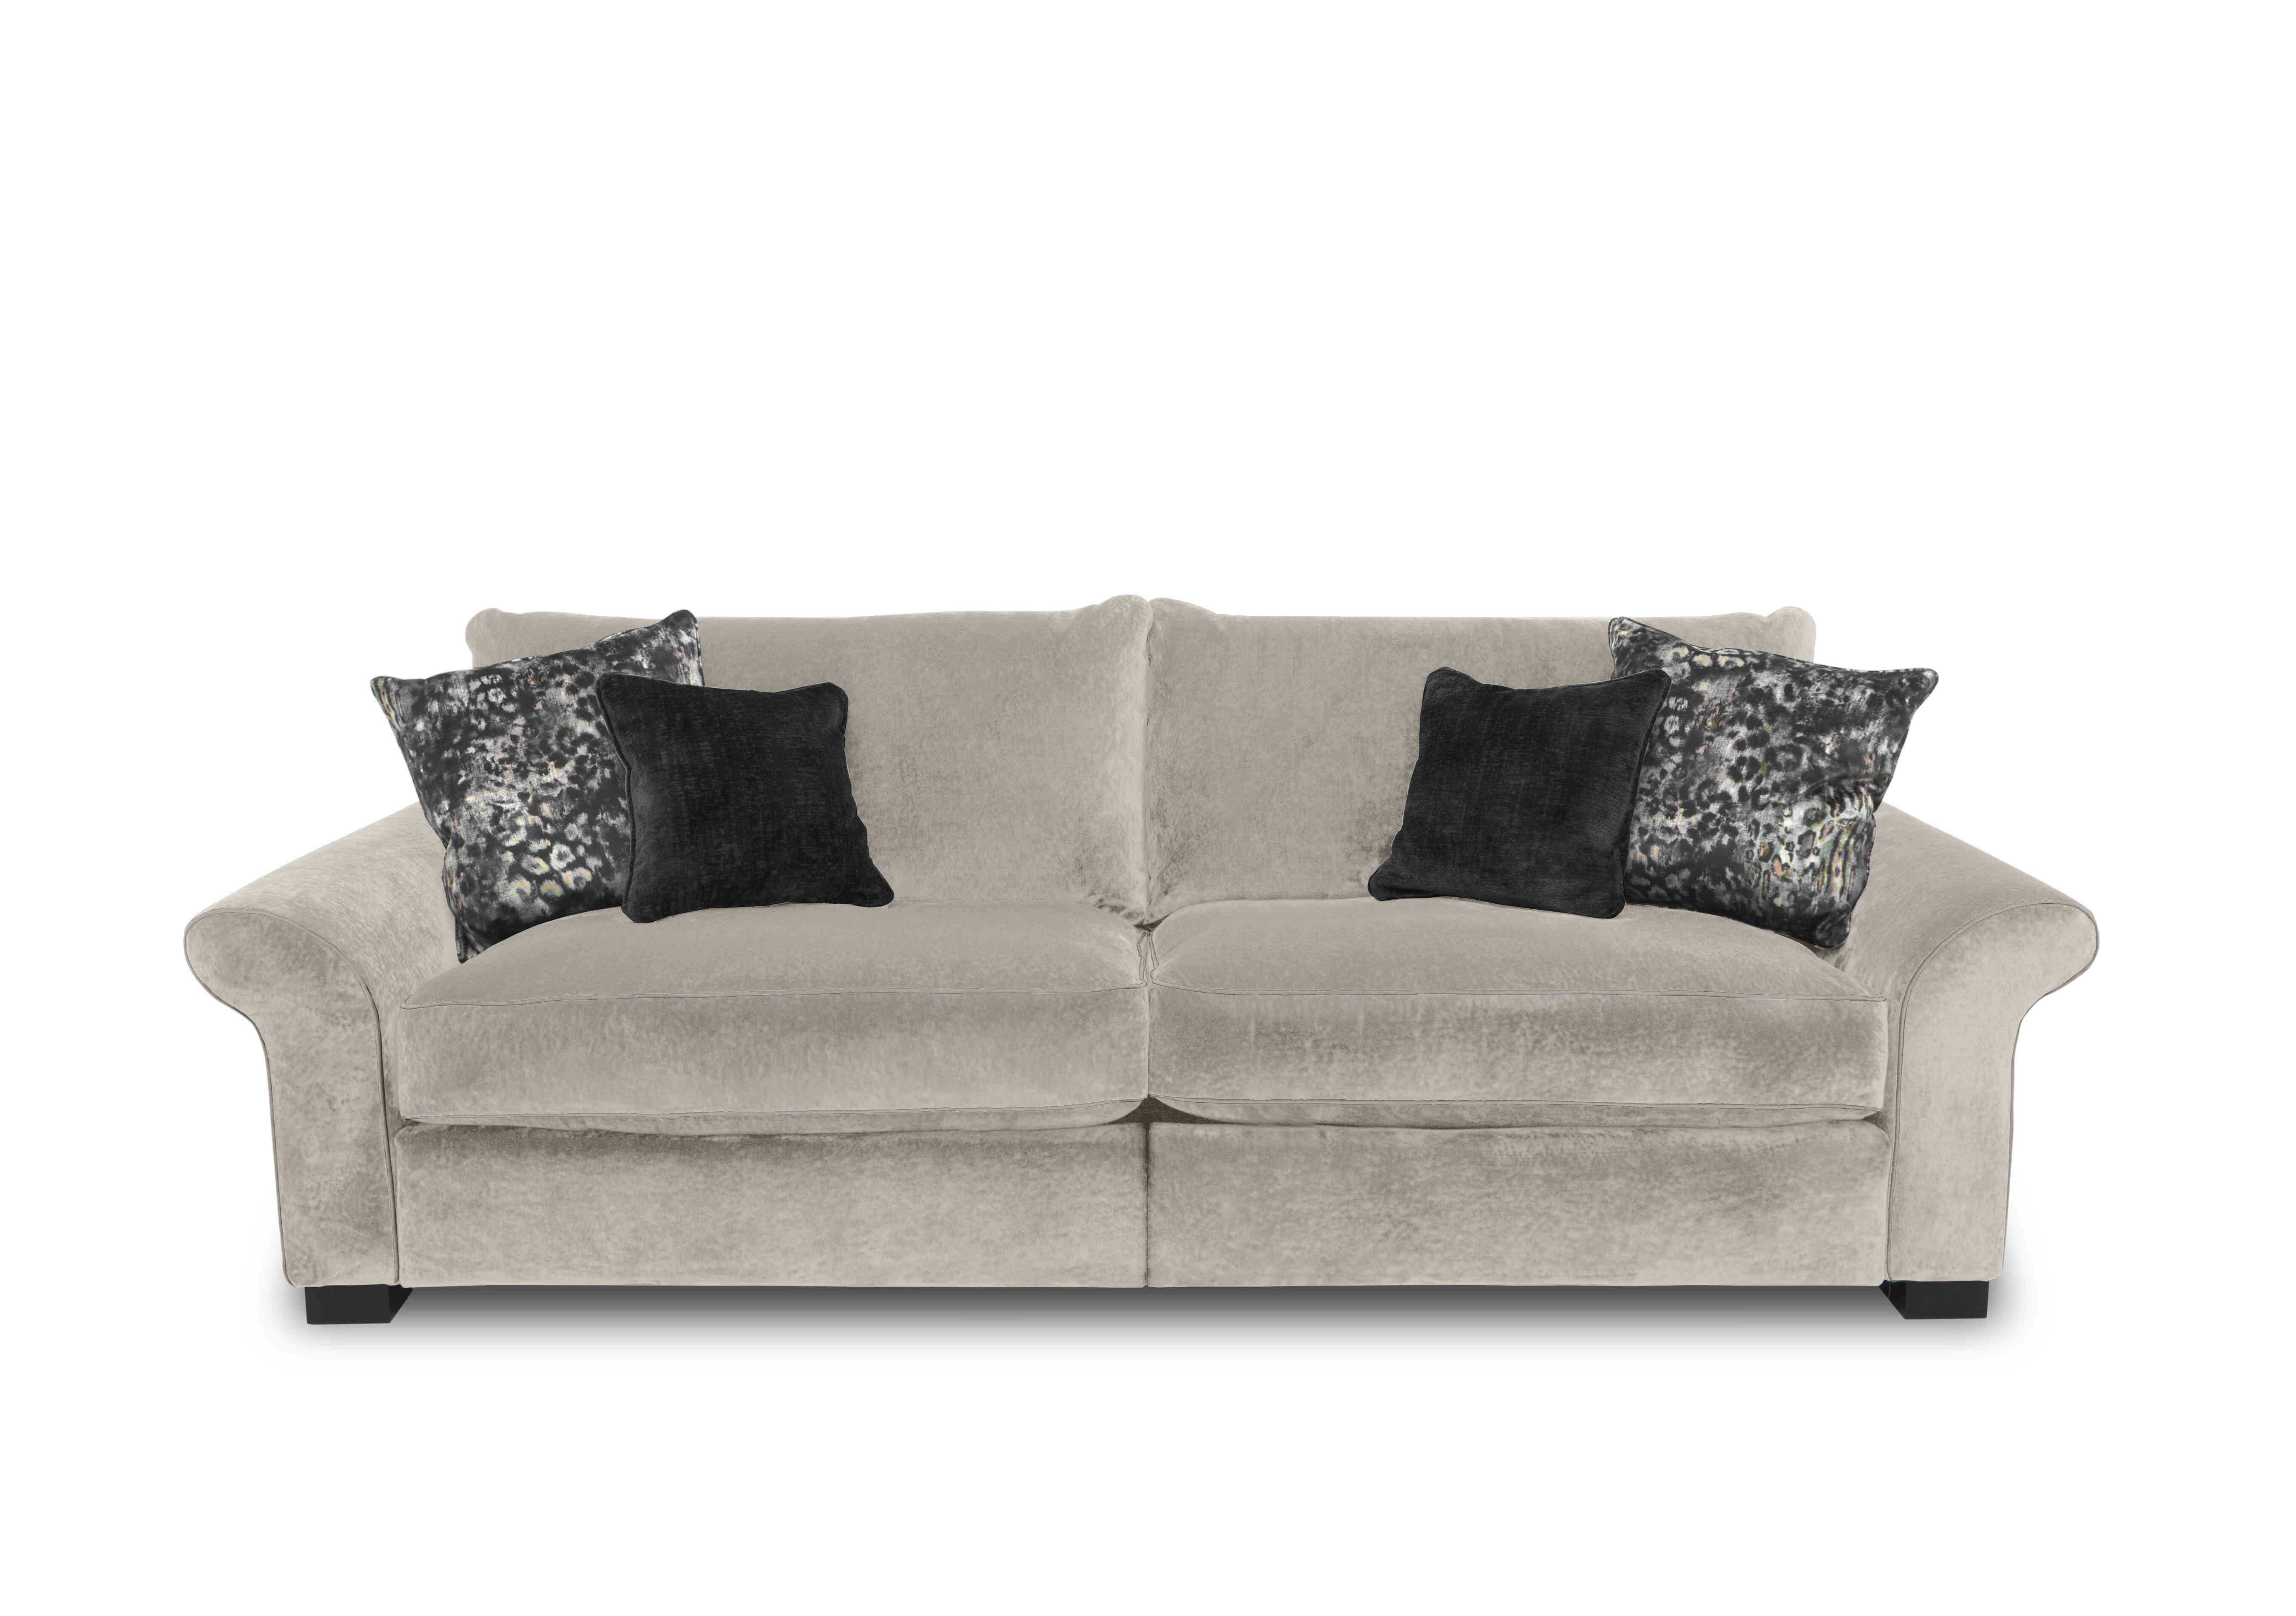 Modern Classics Hyde Park 4 Seater Split Frame Sofa in Remini Oyster Sp Mf on Furniture Village